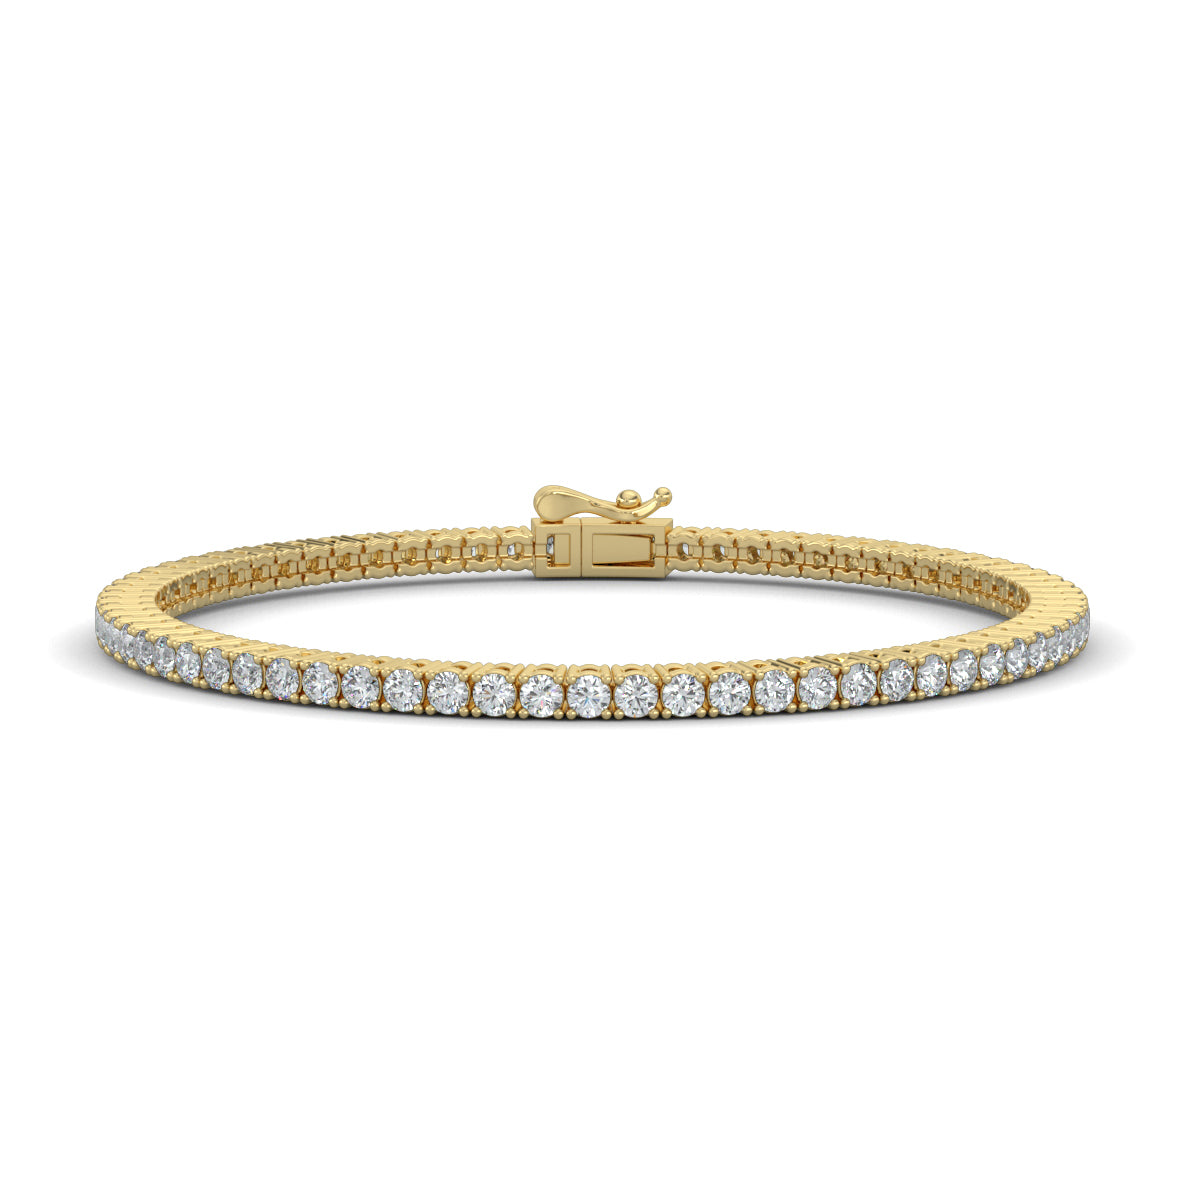 Yellow Gold, Diamond Bracelet, Natural diamond bracelet, Lab-grown diamond bracelet, 15-Pointer Tennis Bracelet, tennis bracelet, prong setting, jewelry